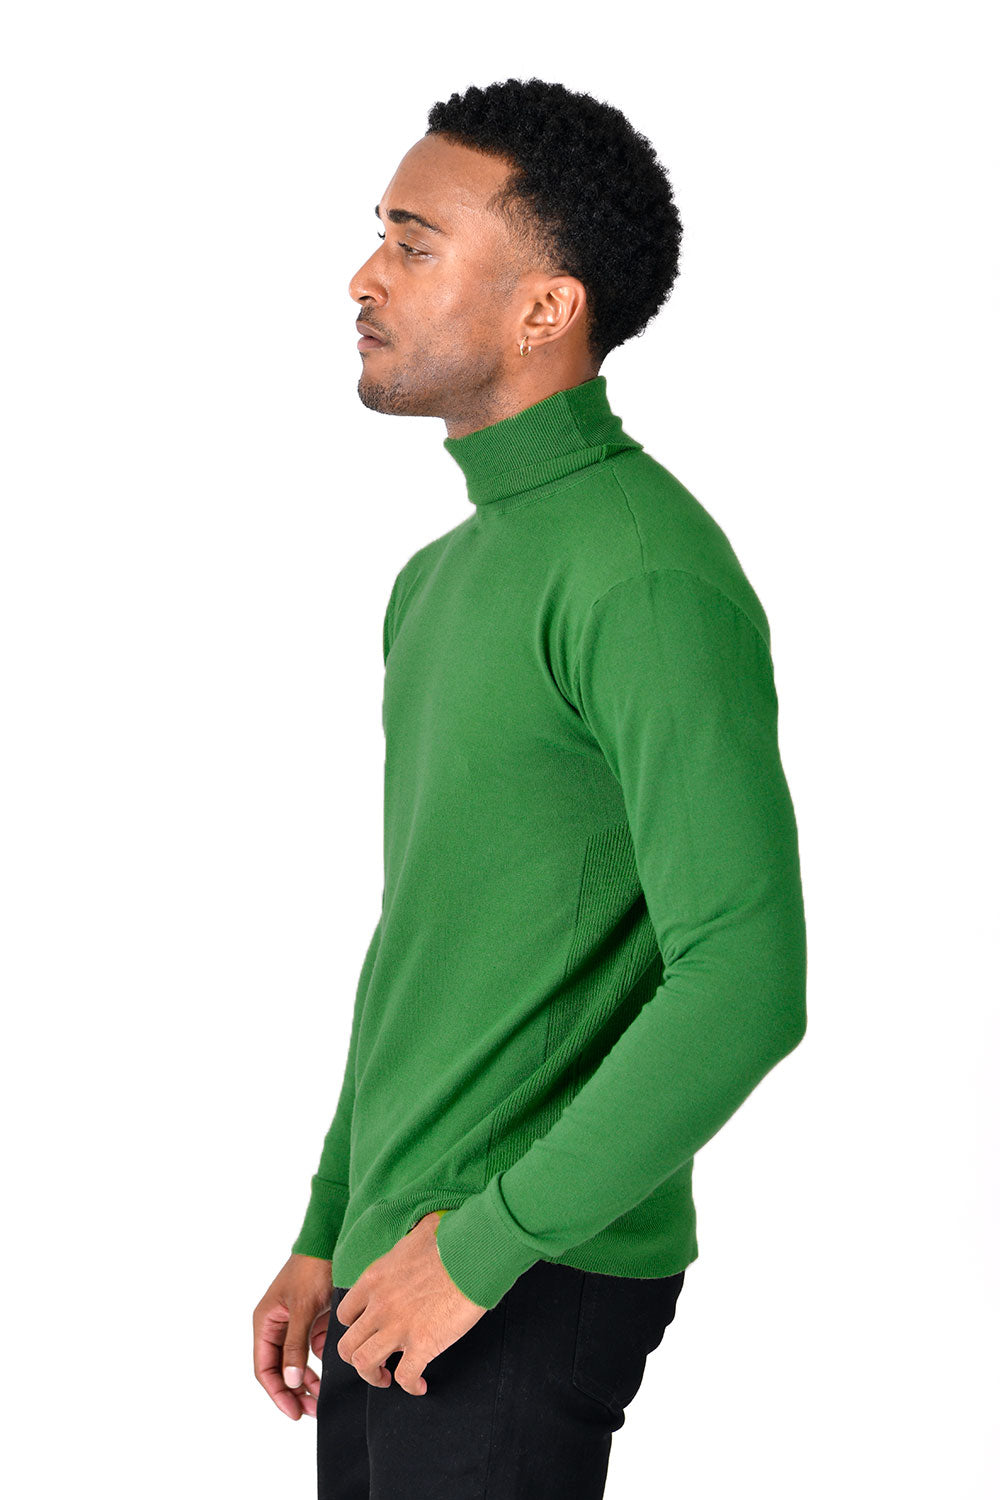 Men's Turtleneck Ribbed Solid Color Basic Sweater LS2100  Green